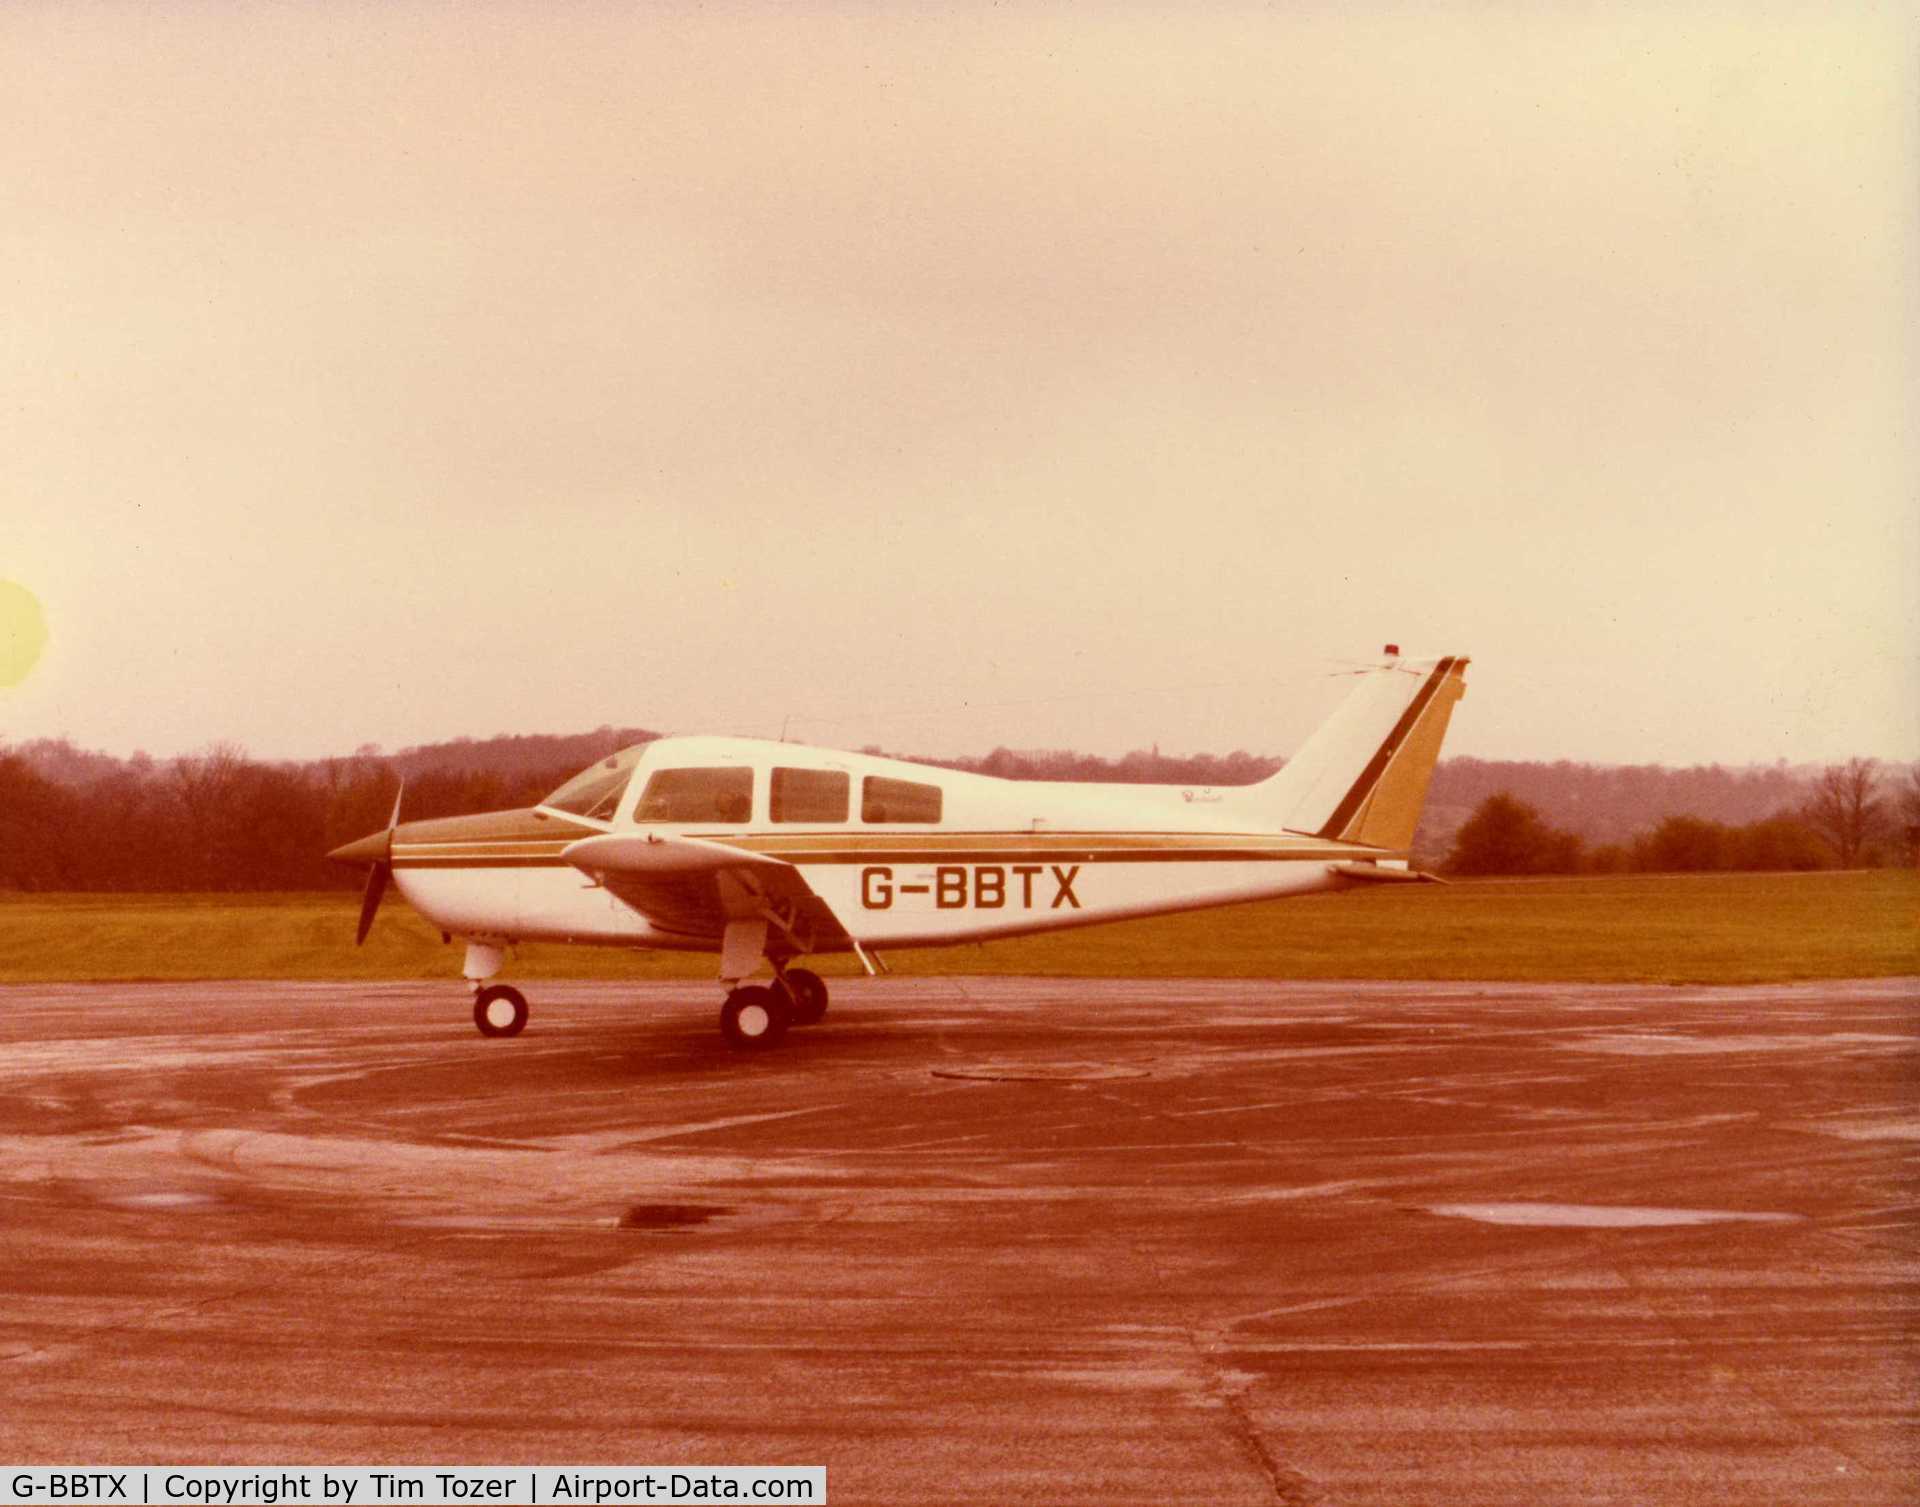 G-BBTX, 1974 Beech C23 Sundowner 180 Sundowner 180 C/N M-1524, New at Eagle Aircraft Co , Watford, England  - Owned by Tim Tozer